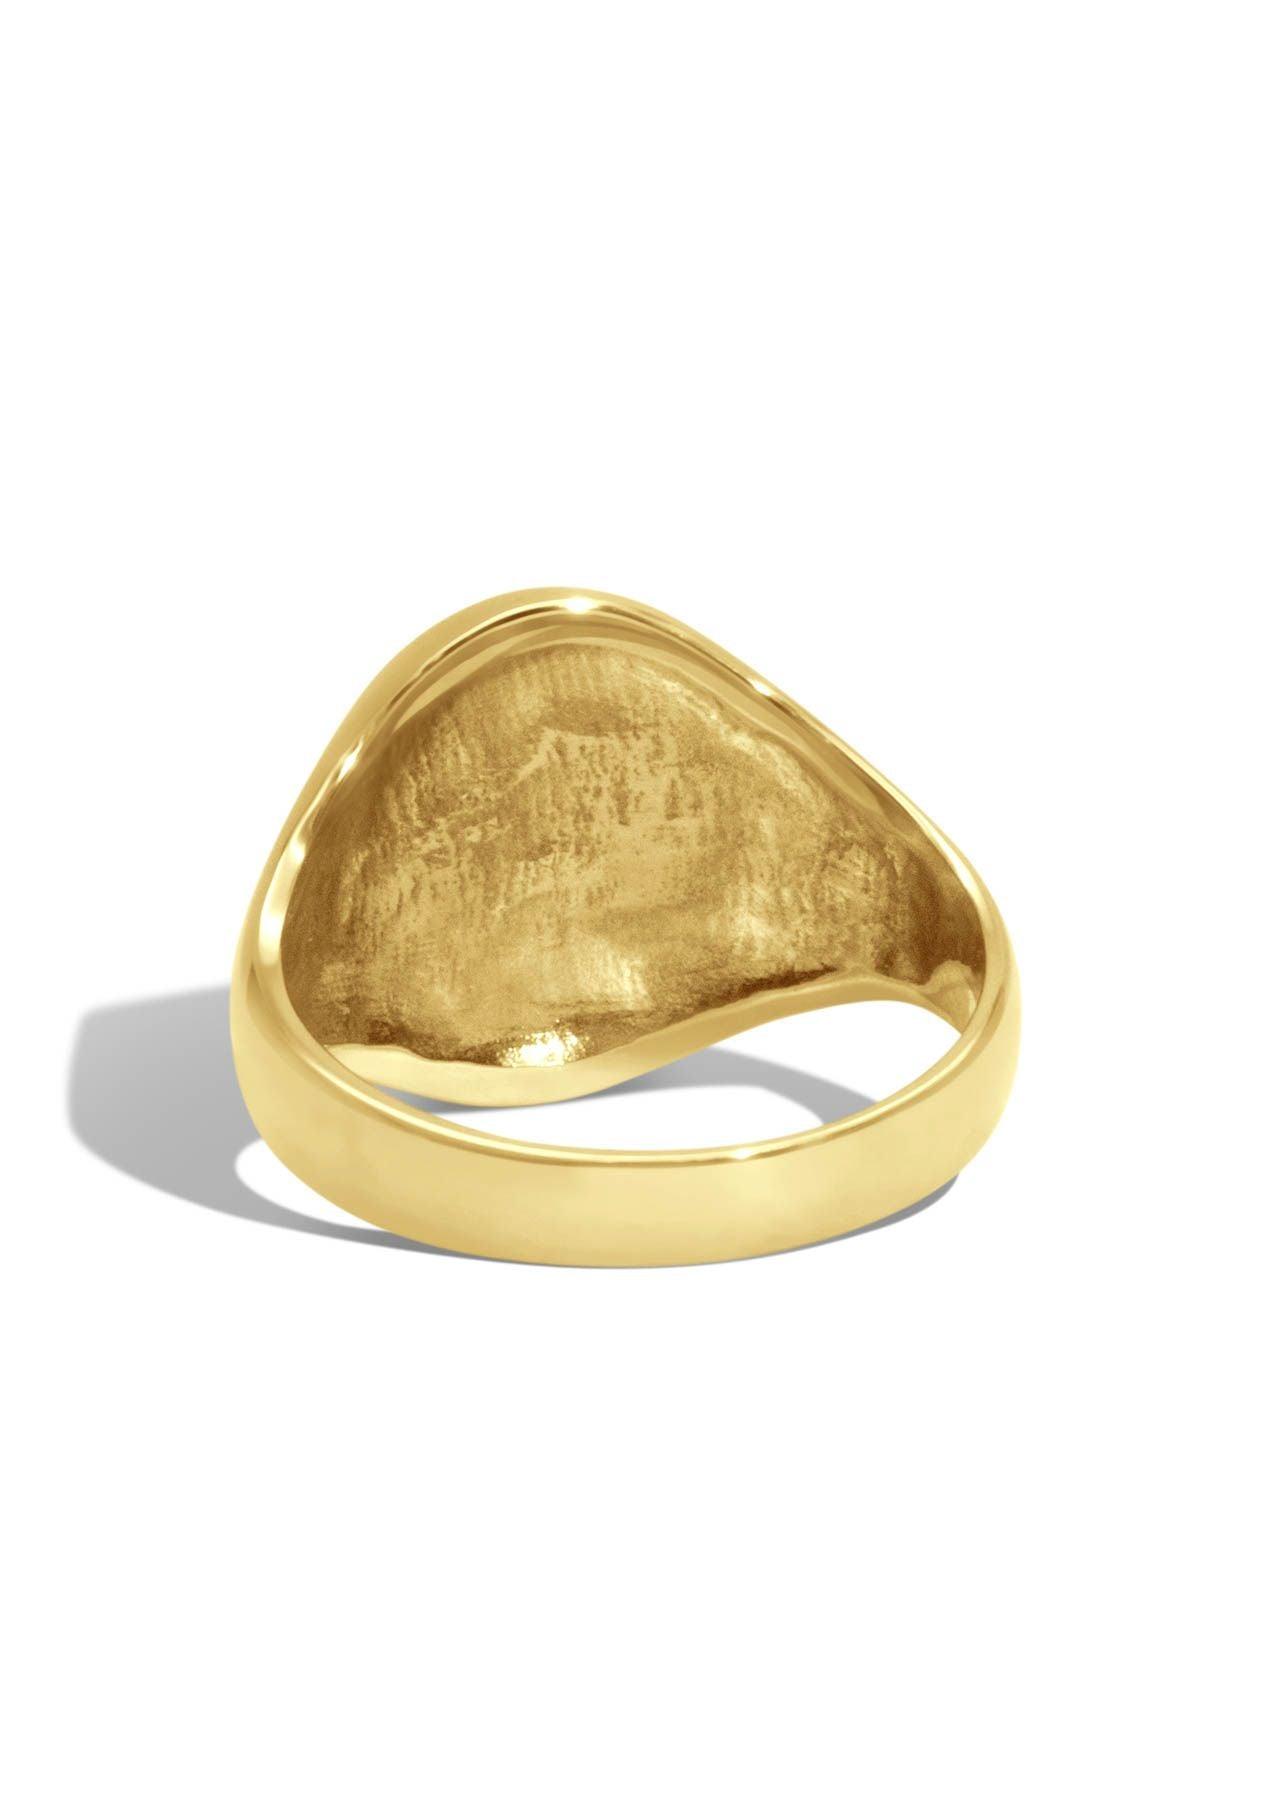 The Era Yellow Gold Signet Ring